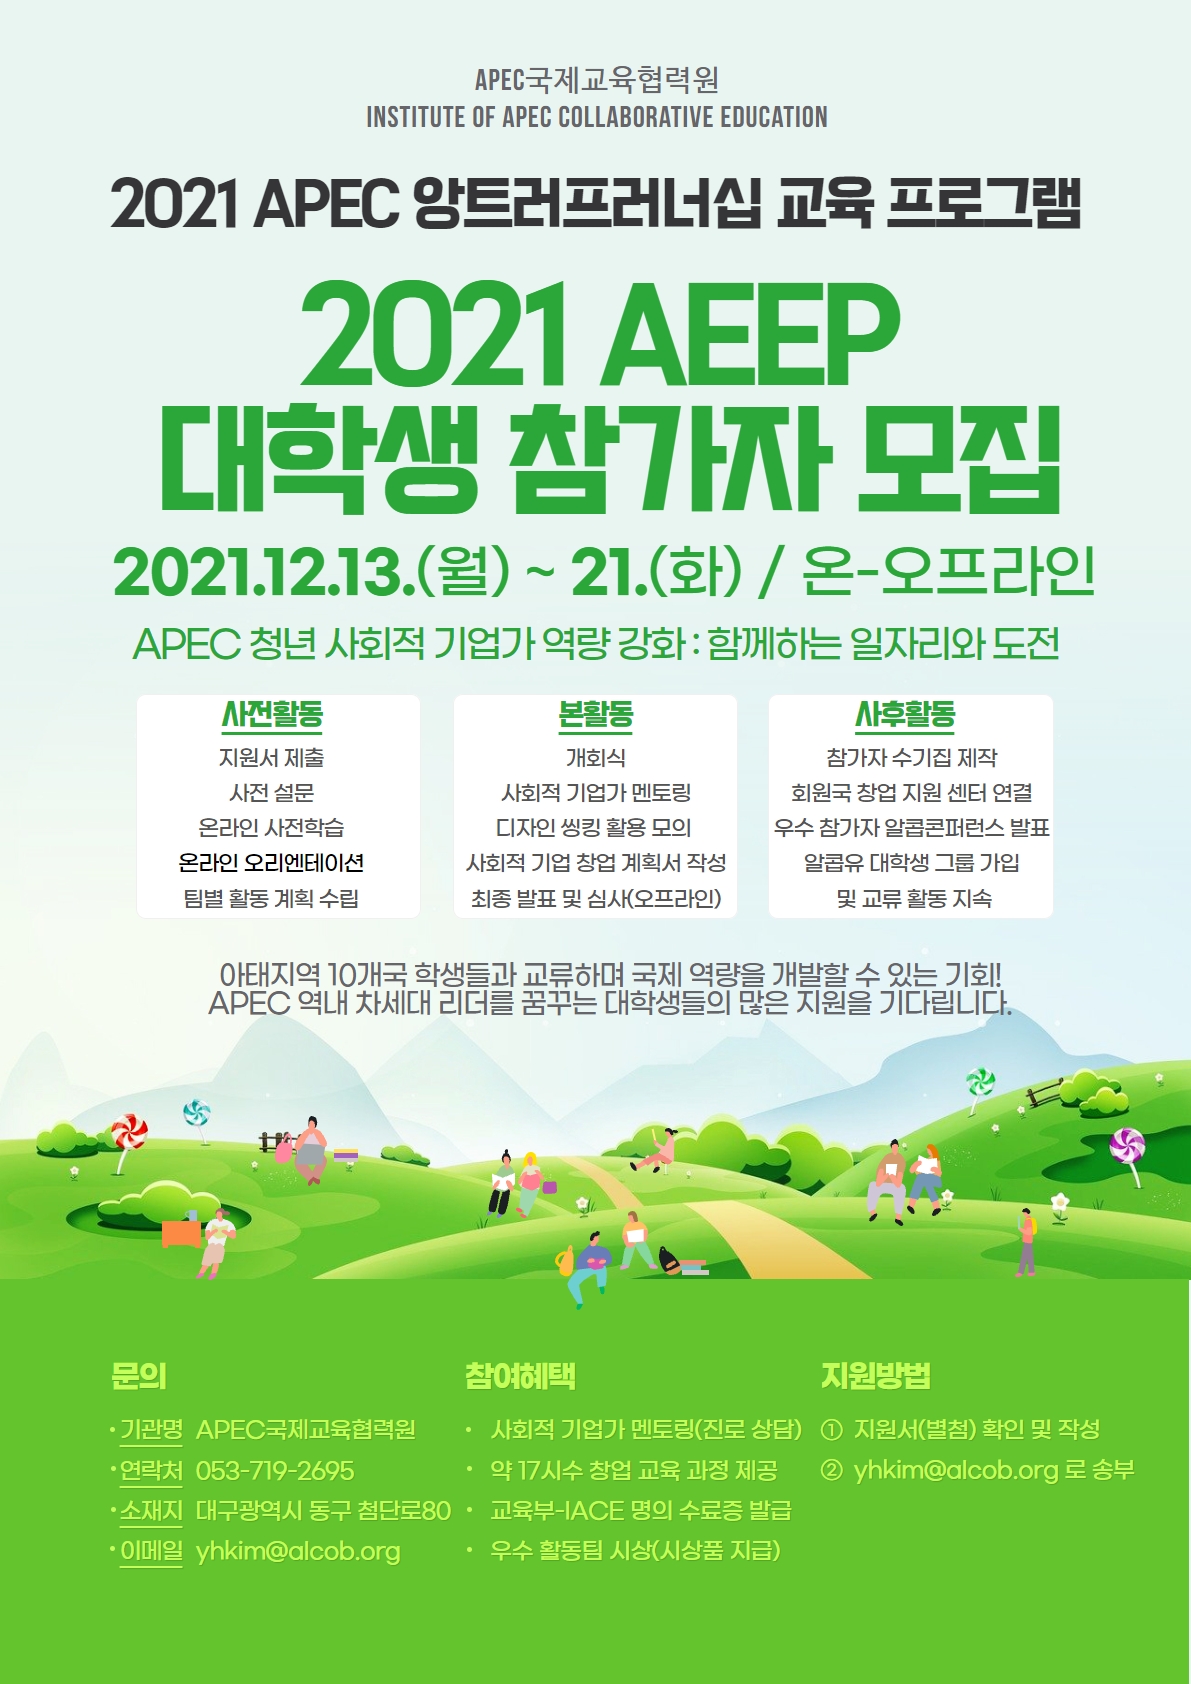 [IACE] 2021년도 APEC 앙트러프러너십 교육 프로그램(AEEP)  이미지